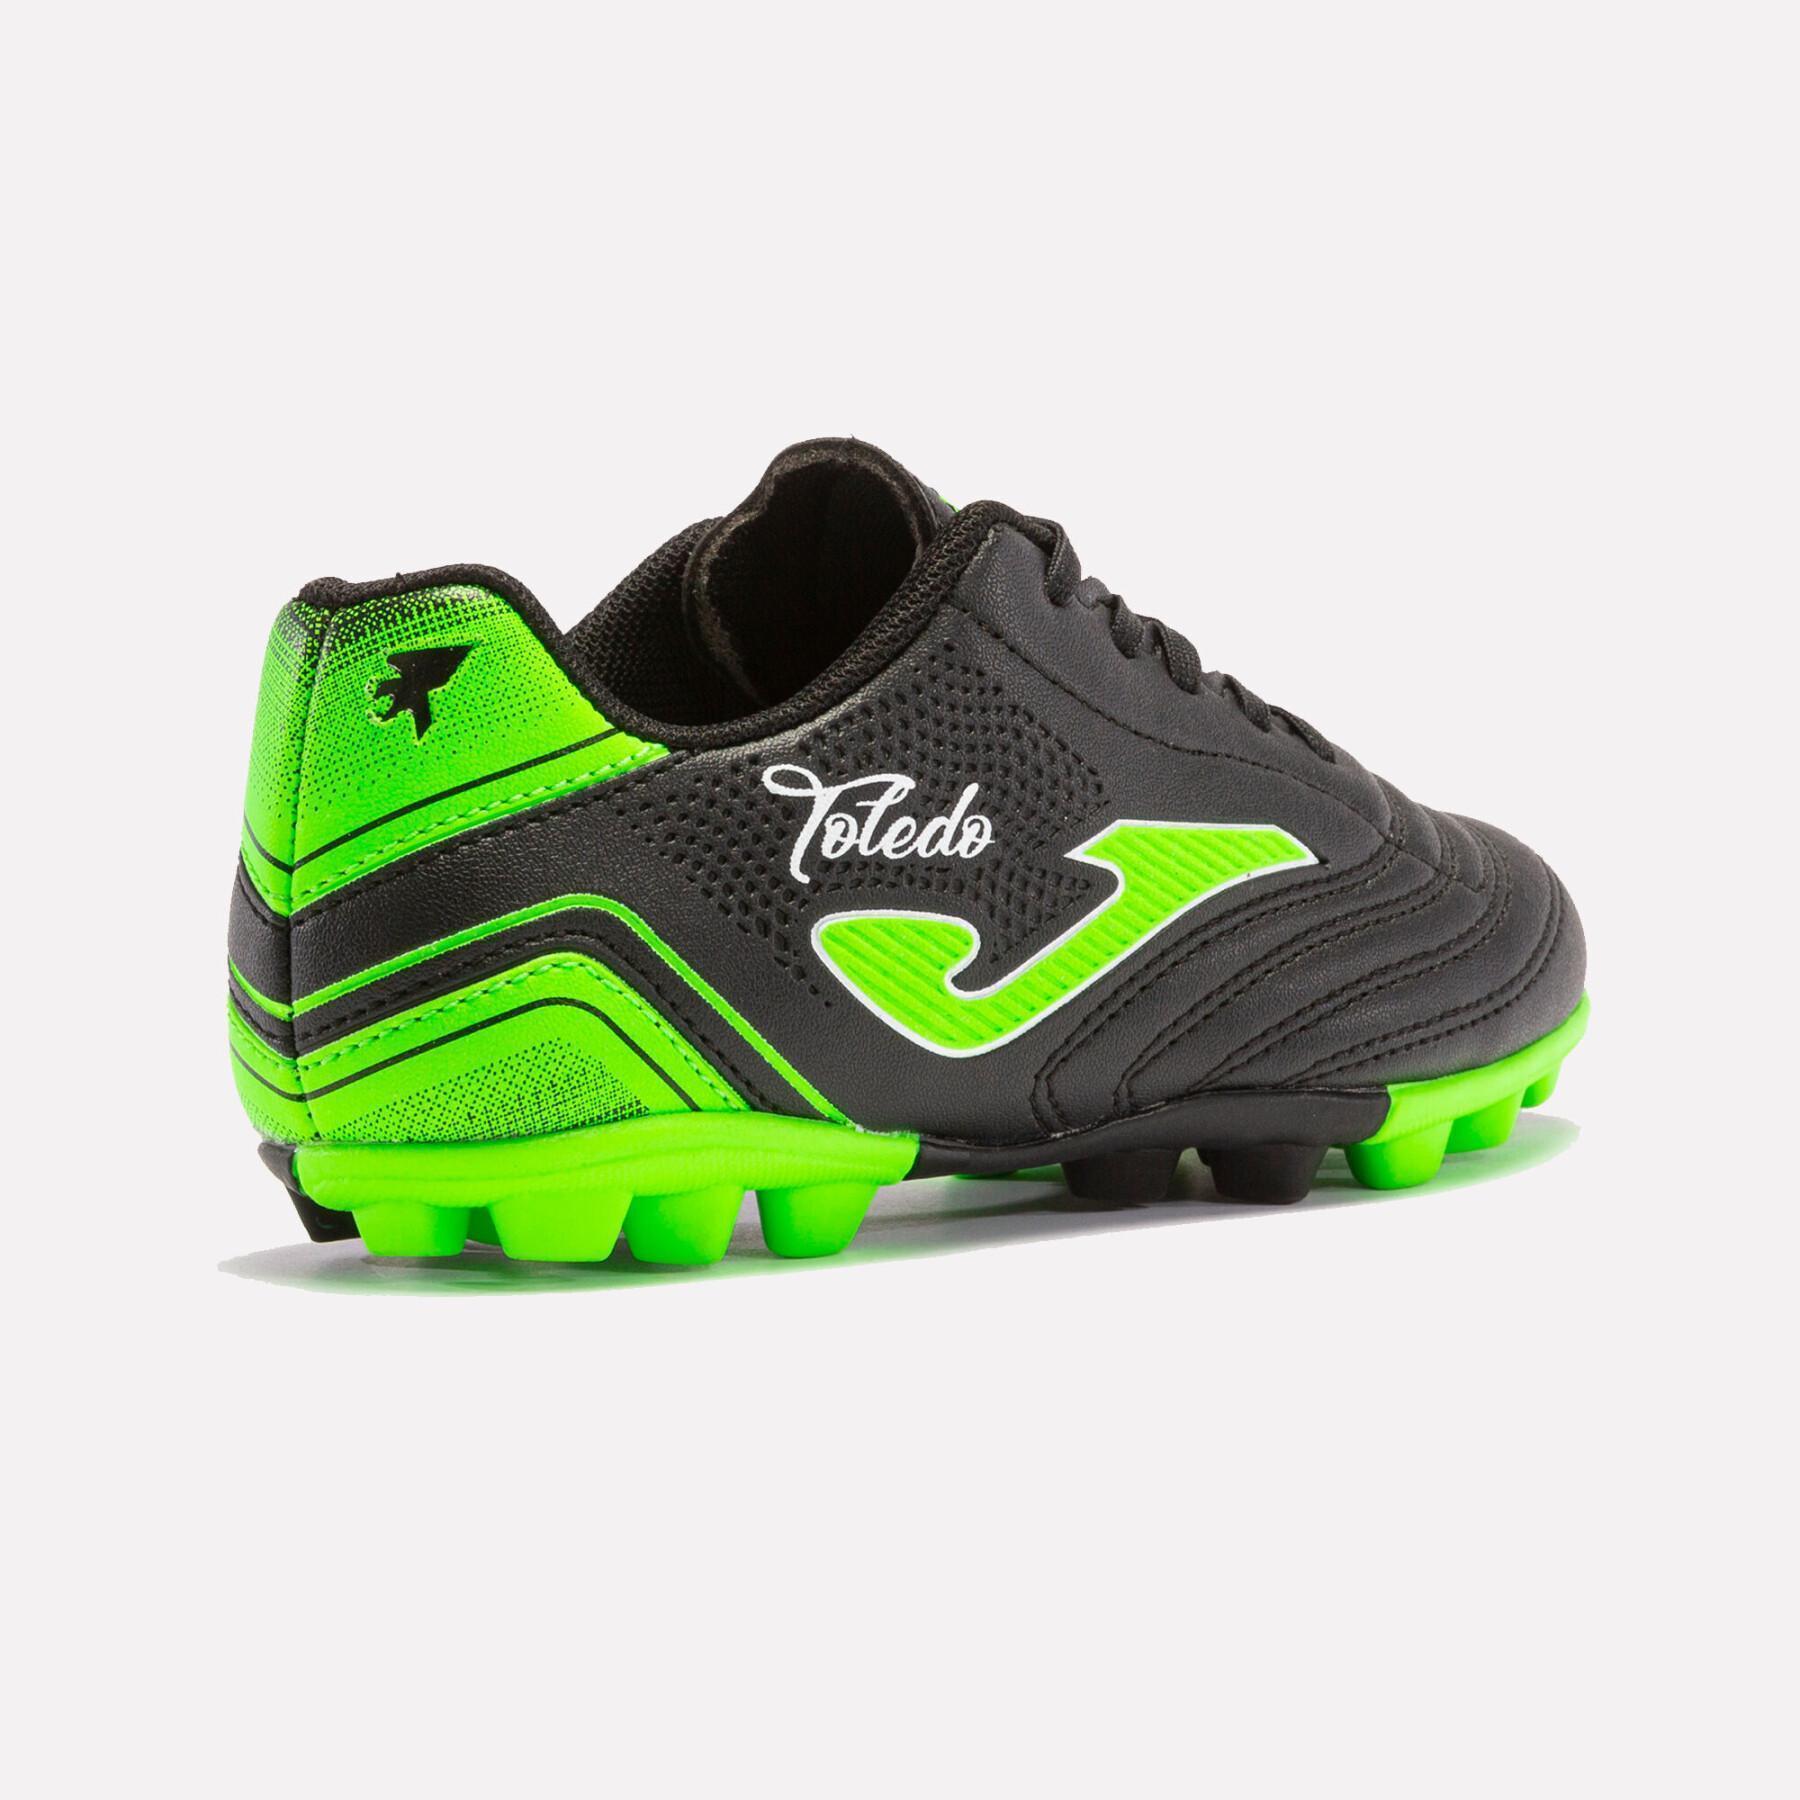 Chaussures de football enfant Joma Toledo 2201 FG